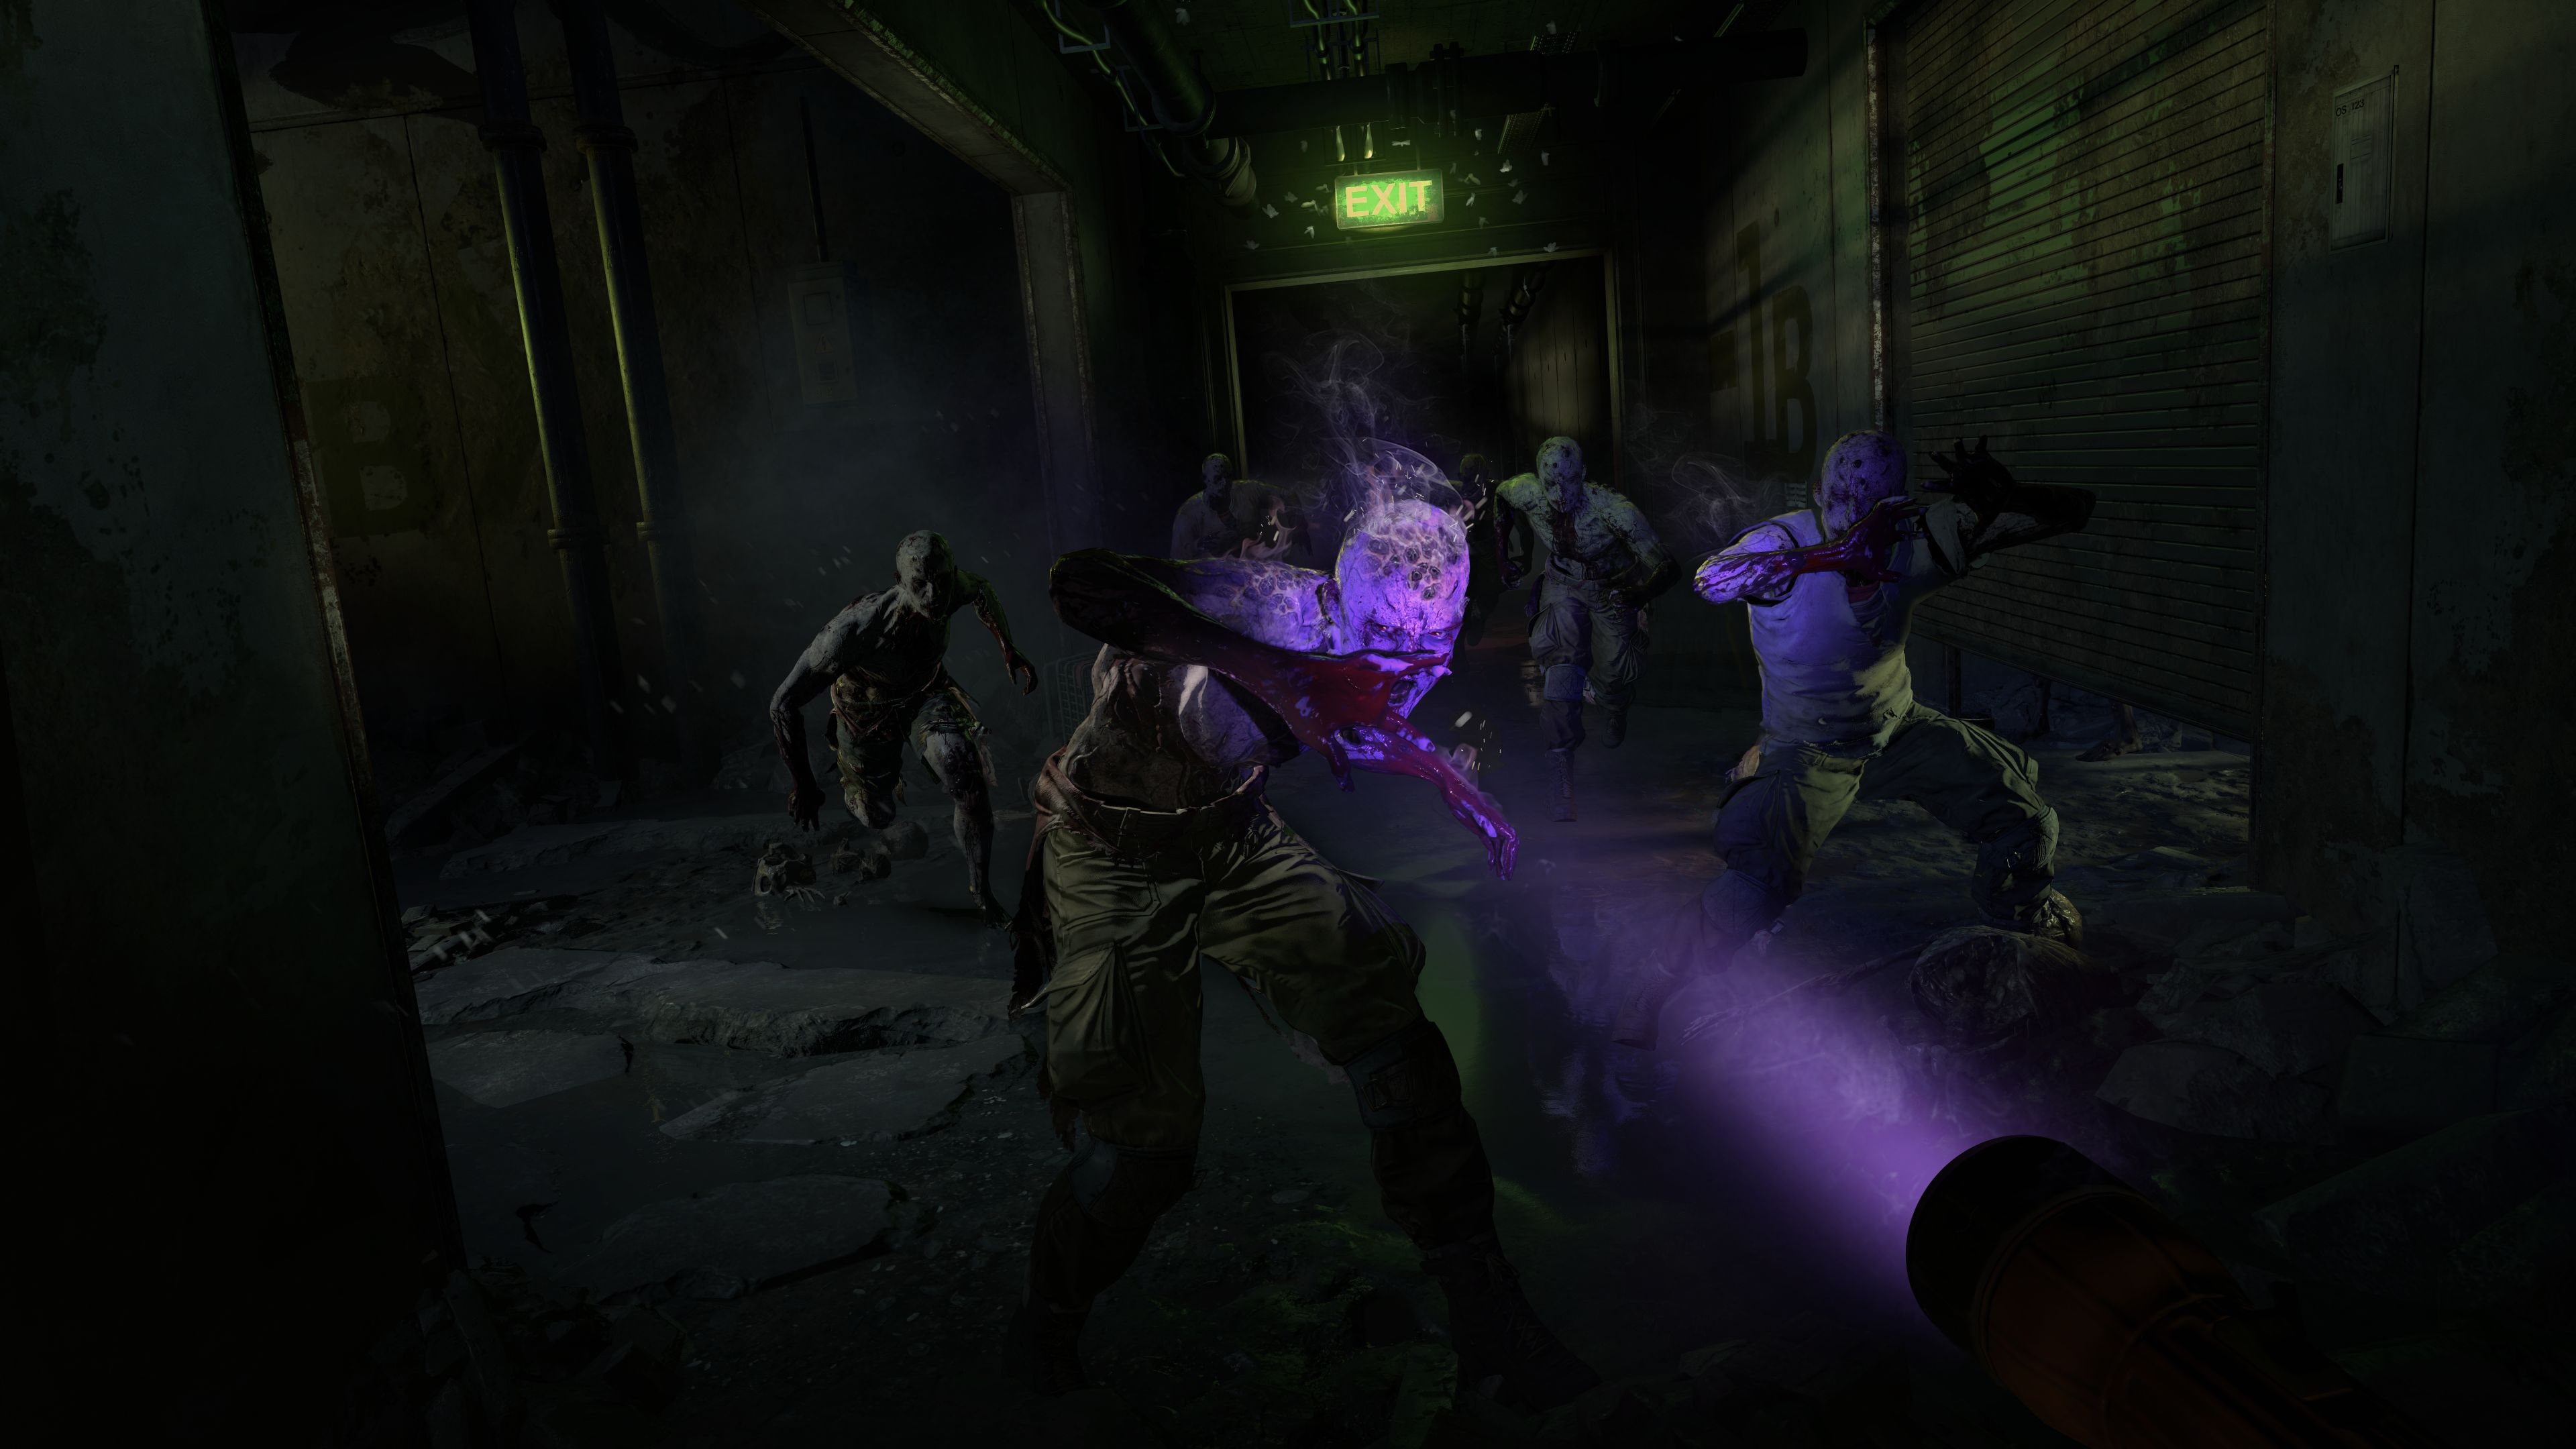 Pode rodar o jogo Dying Light 2 Stay Human?